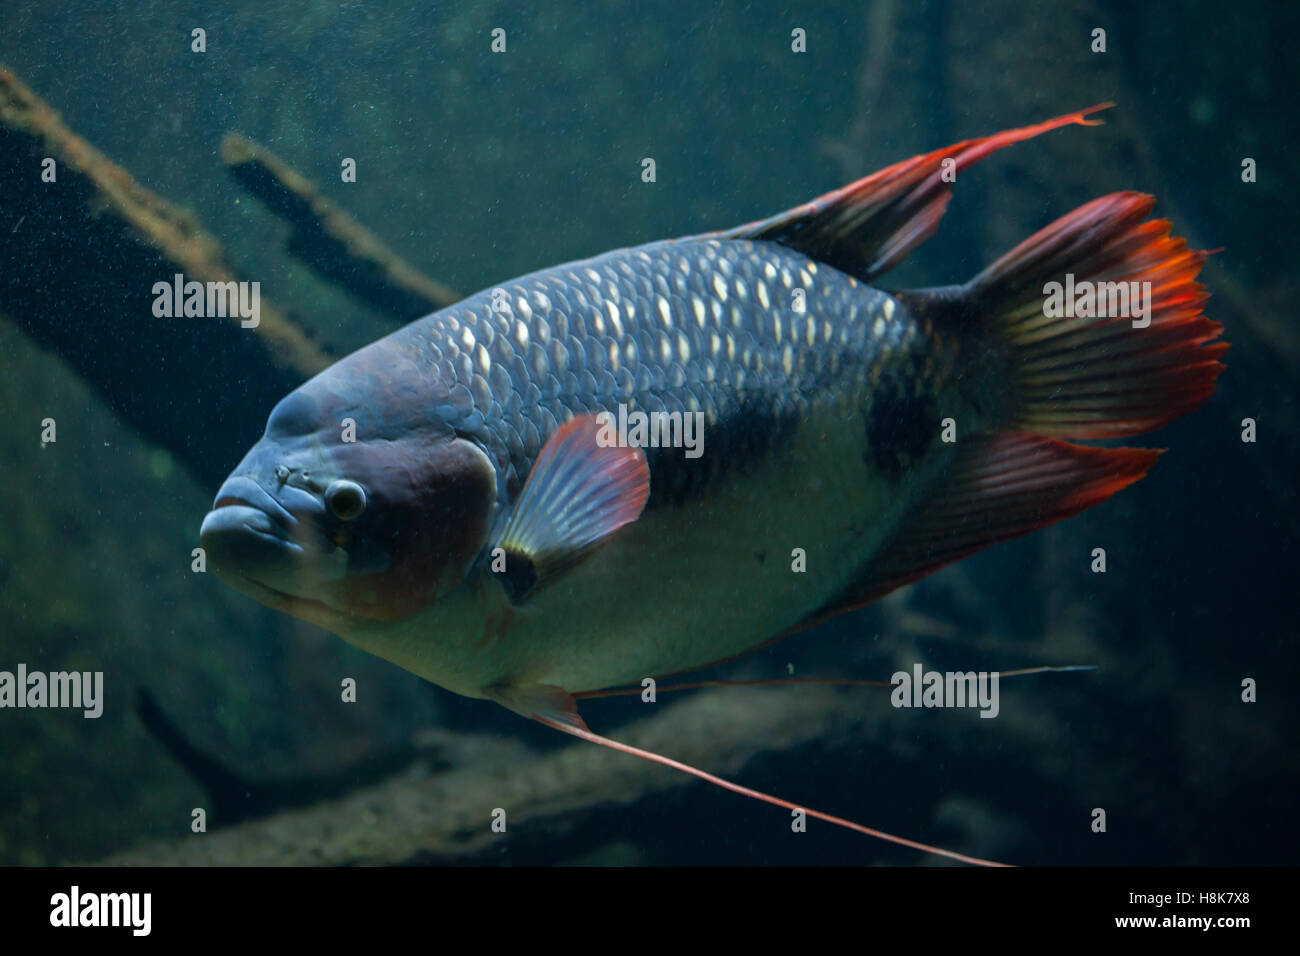 Giant gourami (Osphronemus goramy). Freshwater fish. Stock Photo